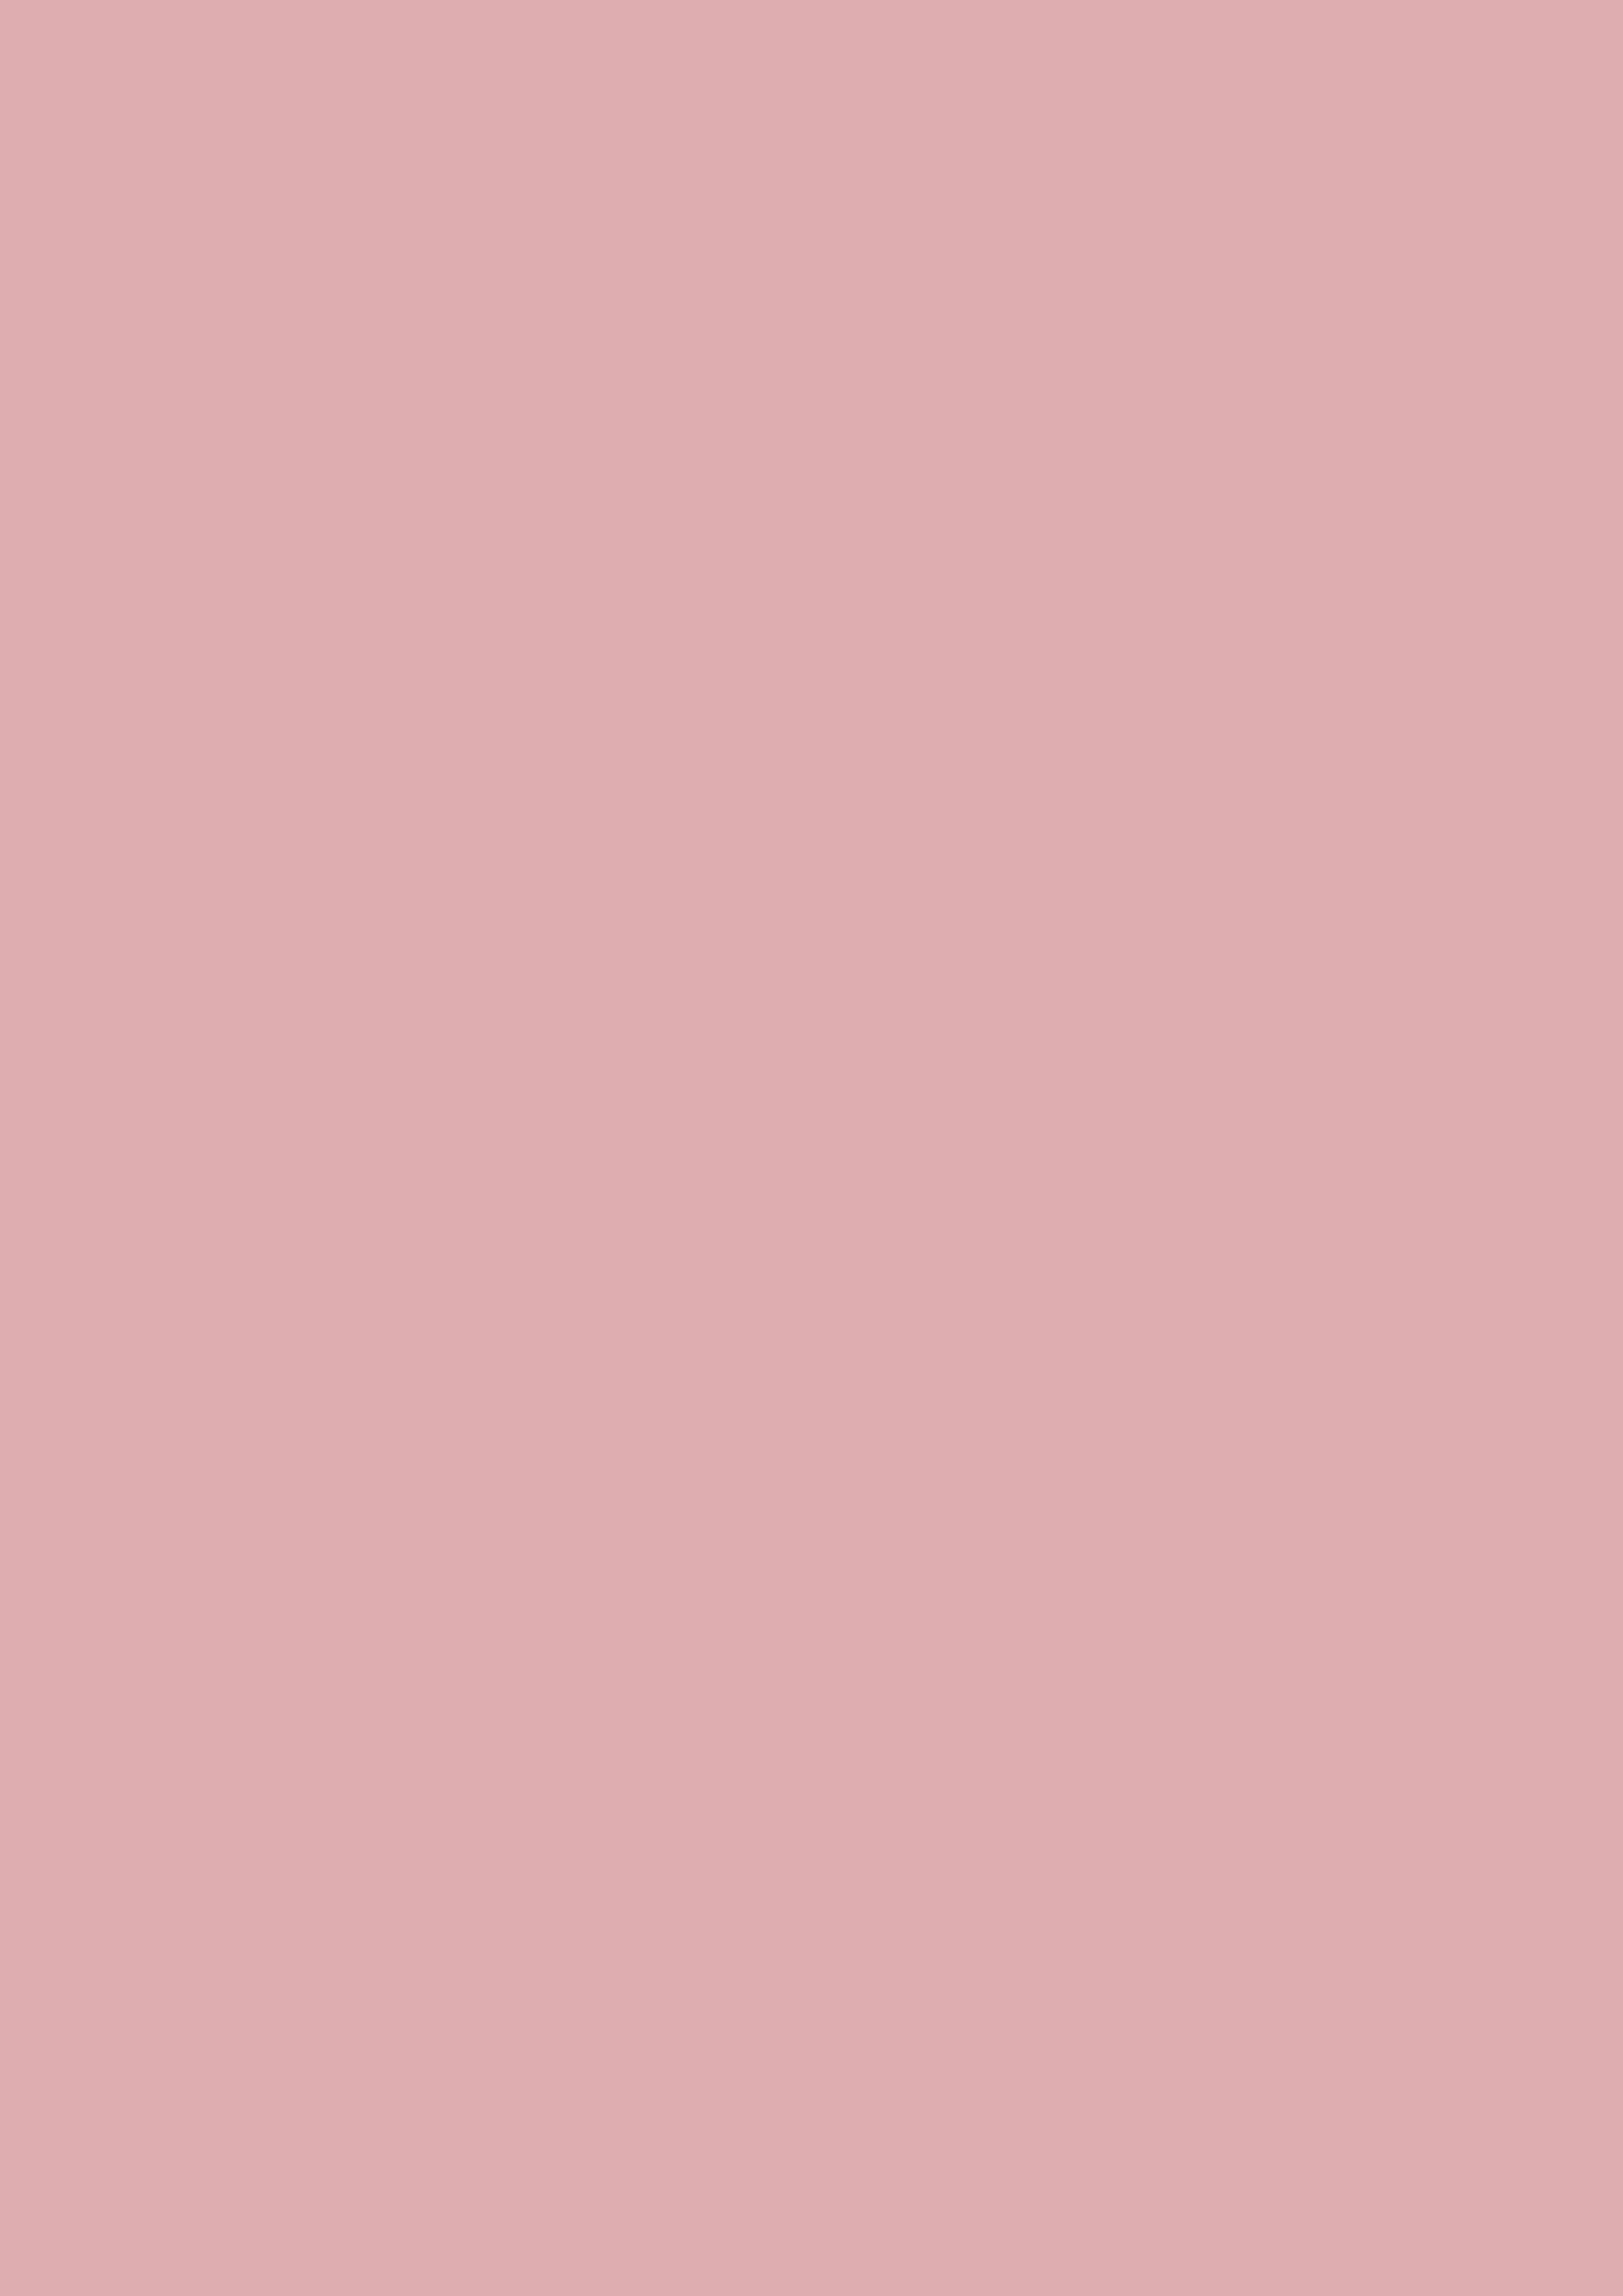 2480x3508 Pale Chestnut Solid Color Background